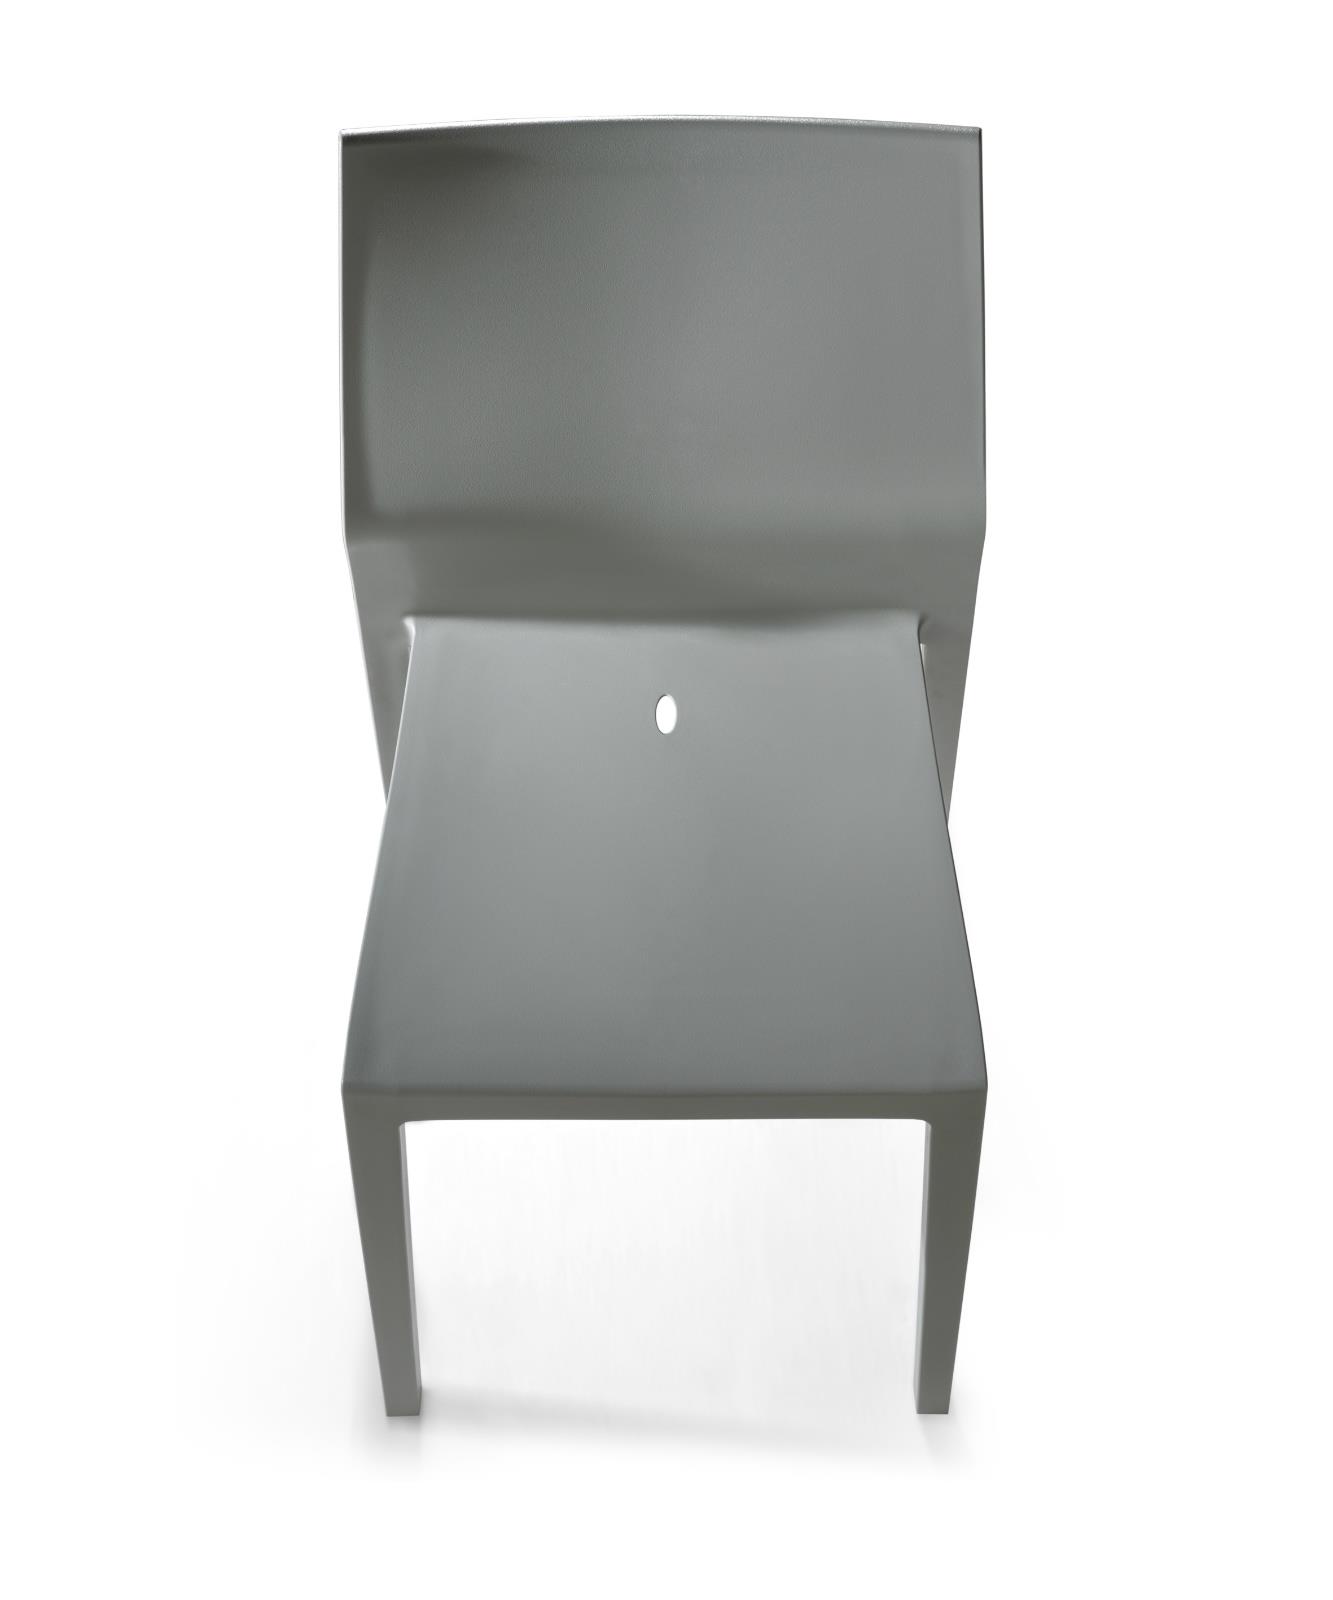 Hoth Chair by IBEBI Design